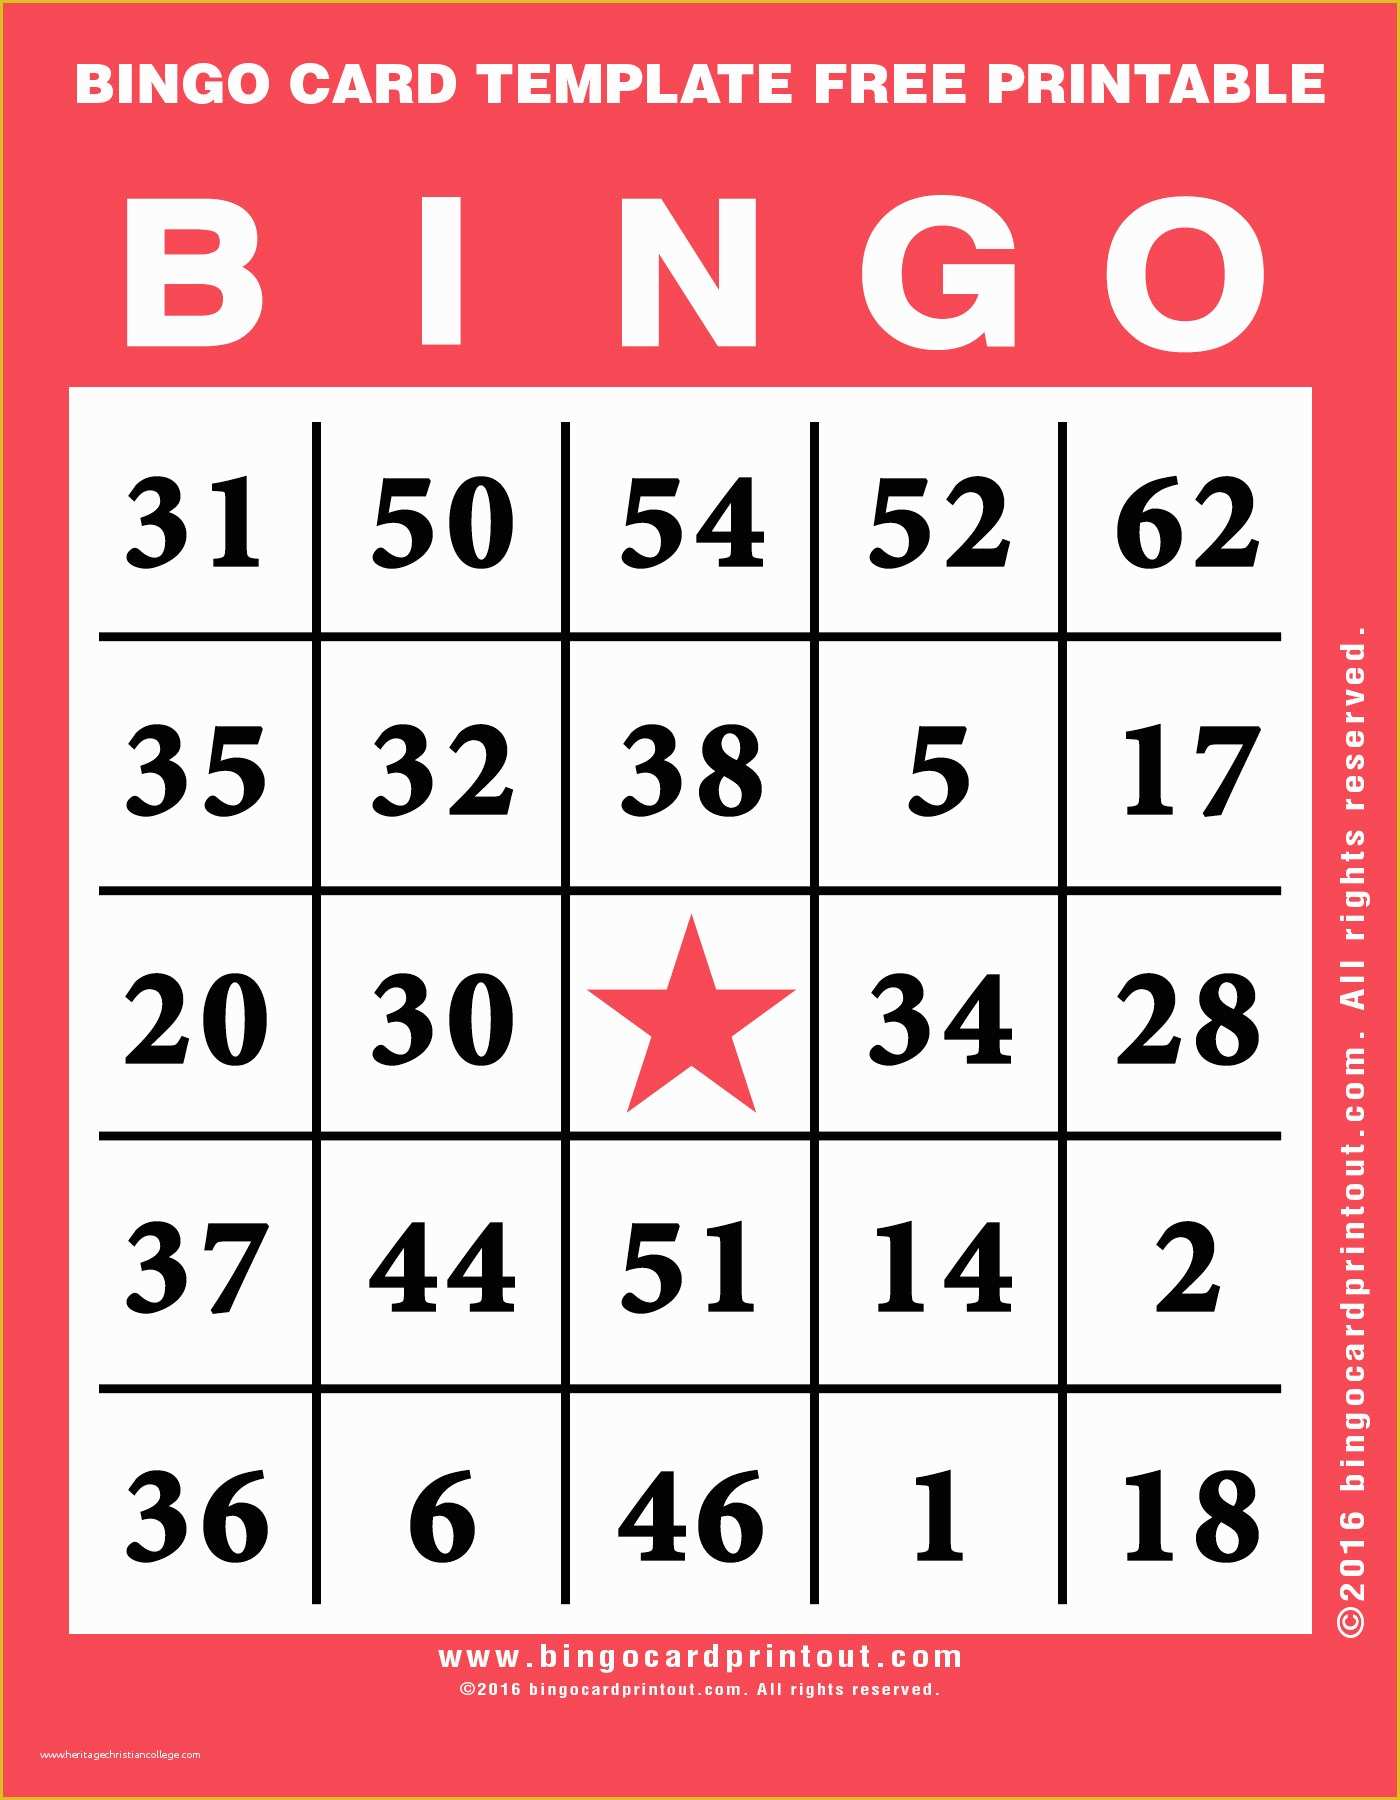 Bingo Card Template Free Of Bingo Card Template Free Printable Bingocardprintout